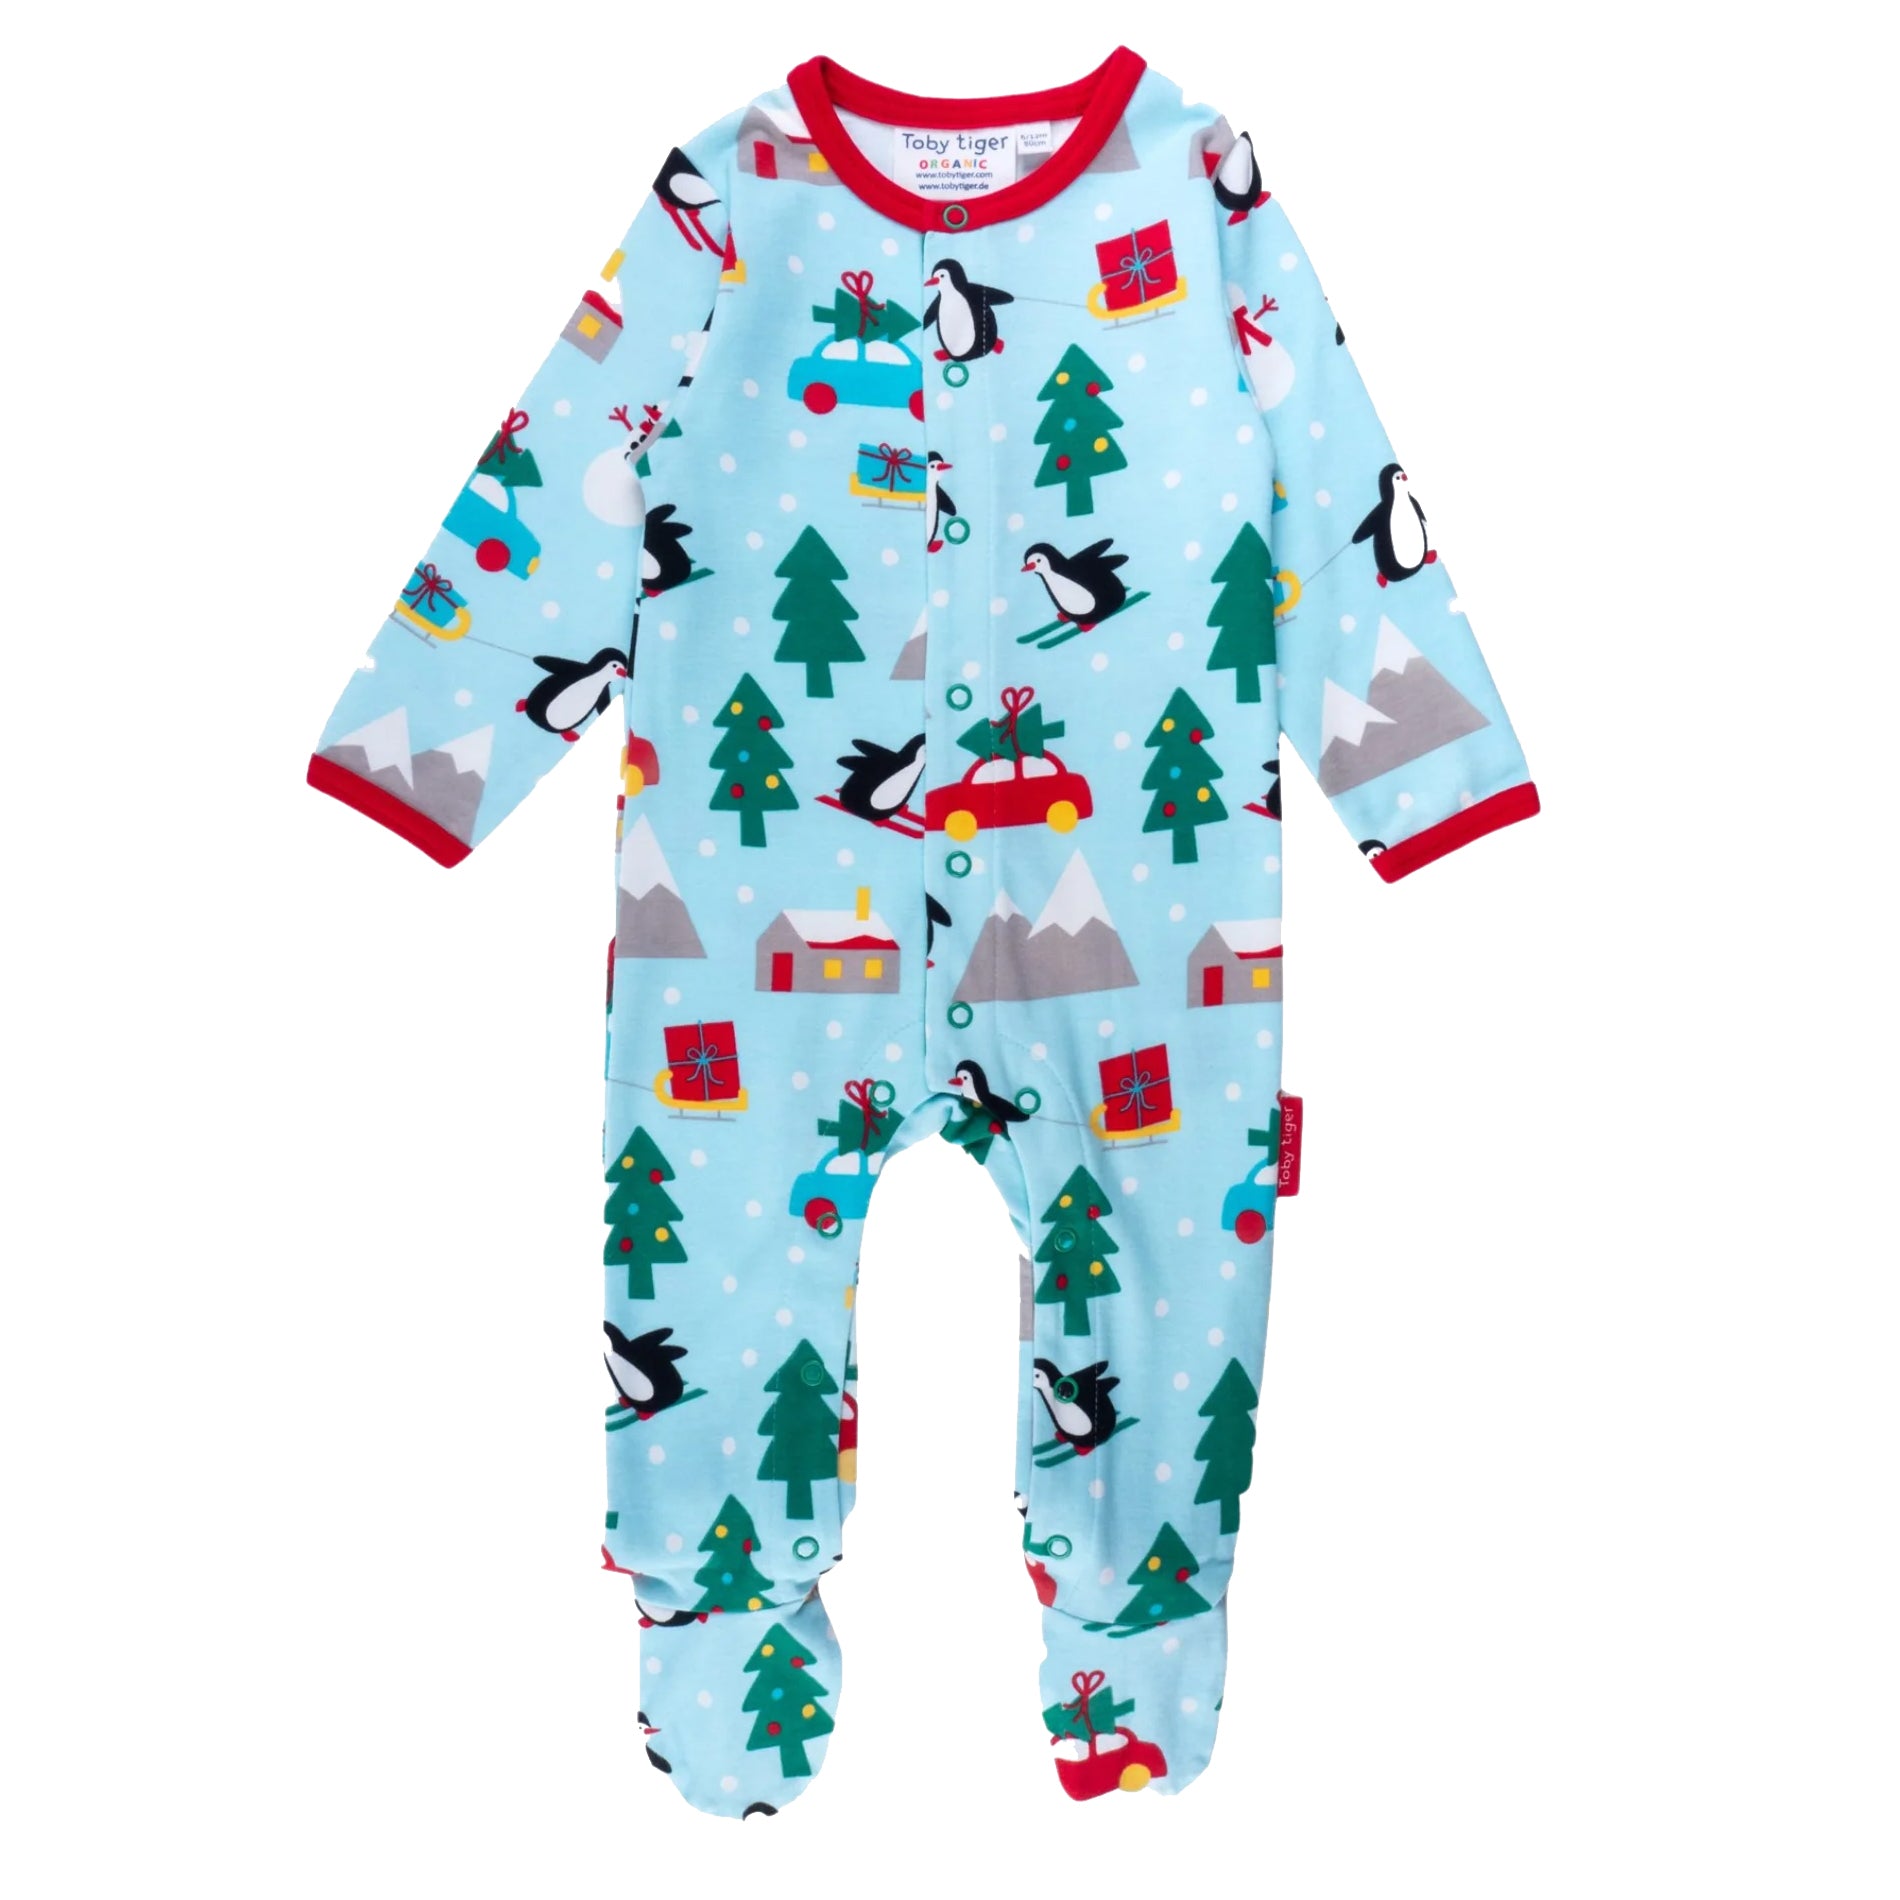 Toby Tiger Penguin's Christmas print organic footed pajamas